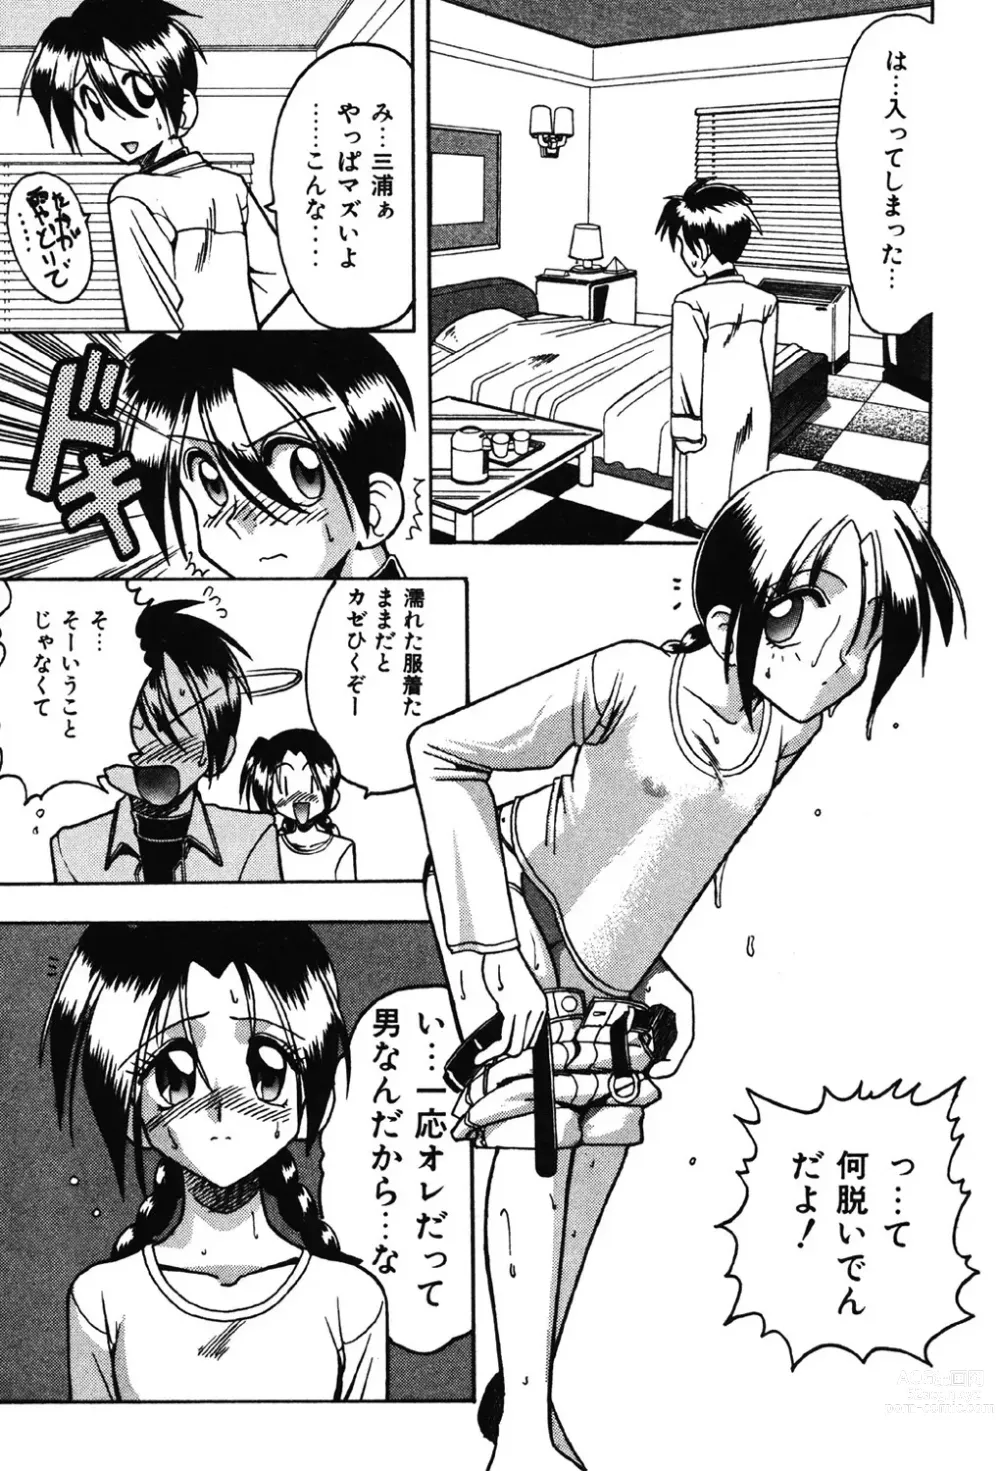 Page 136 of manga Hahaoya Ga Onna Ni Naru Toki